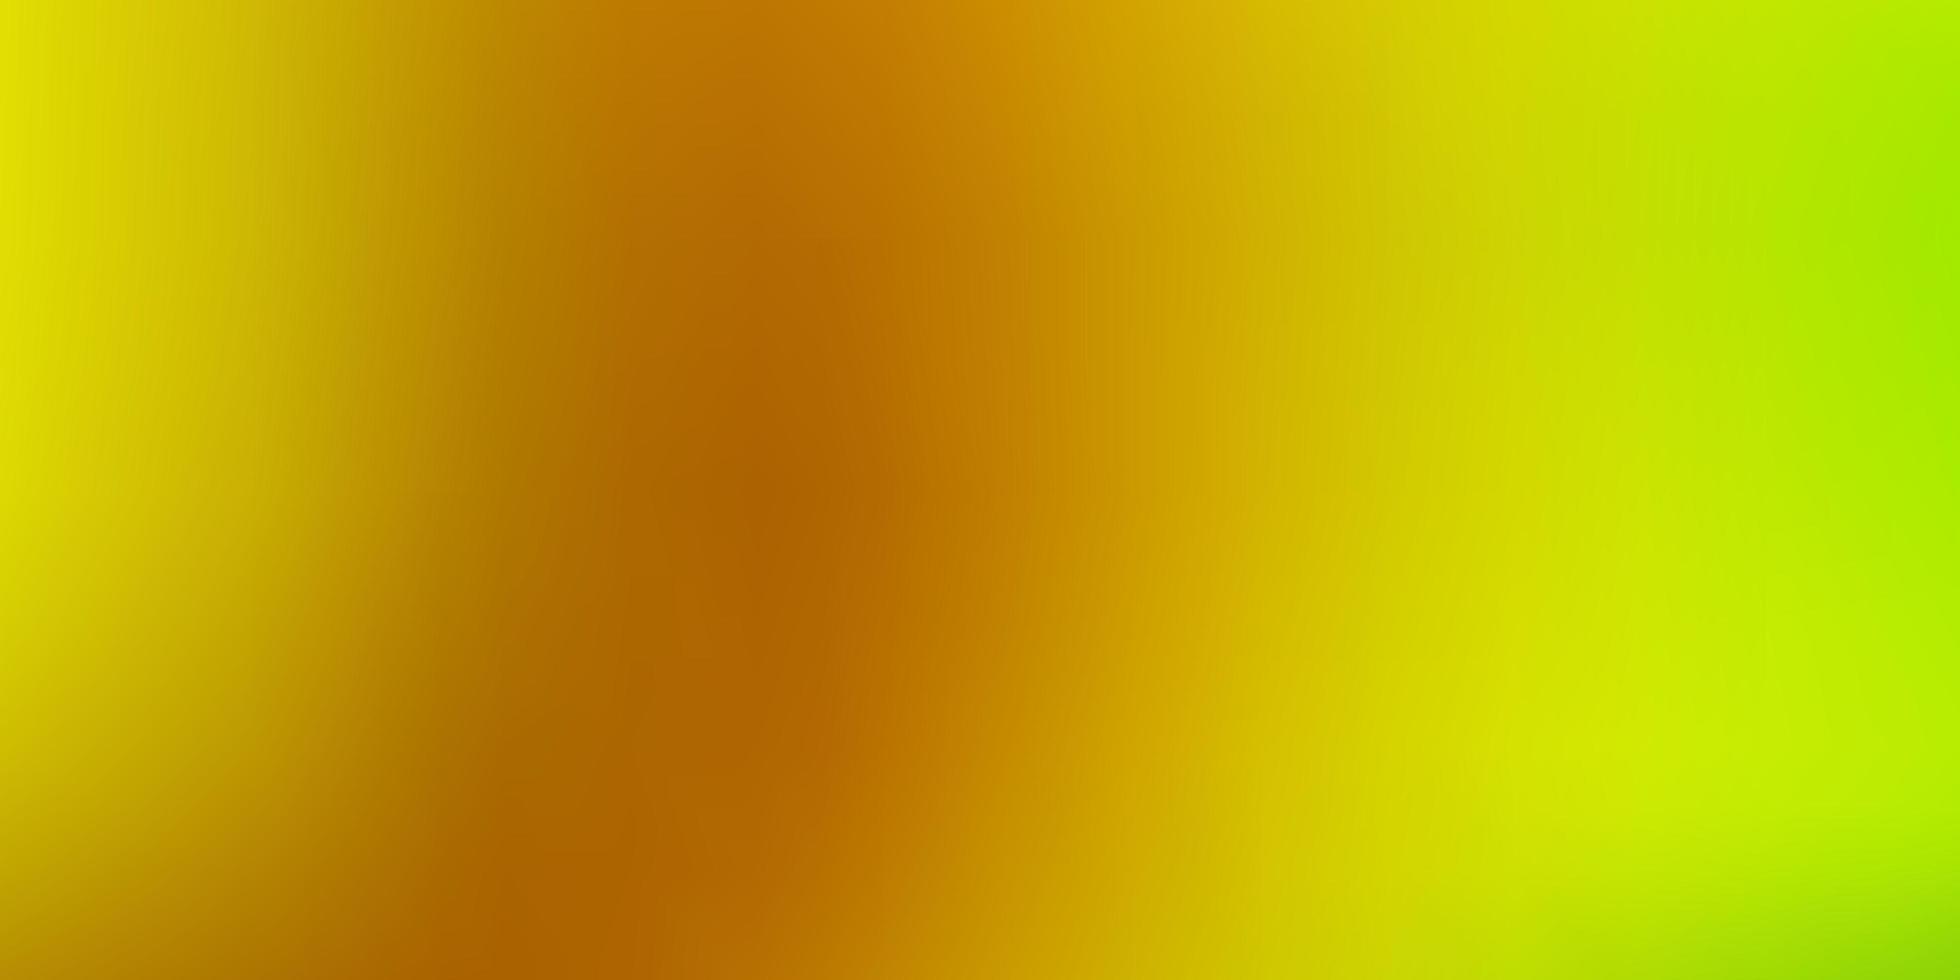 ljusgrön, gul vektor modern suddig layout.